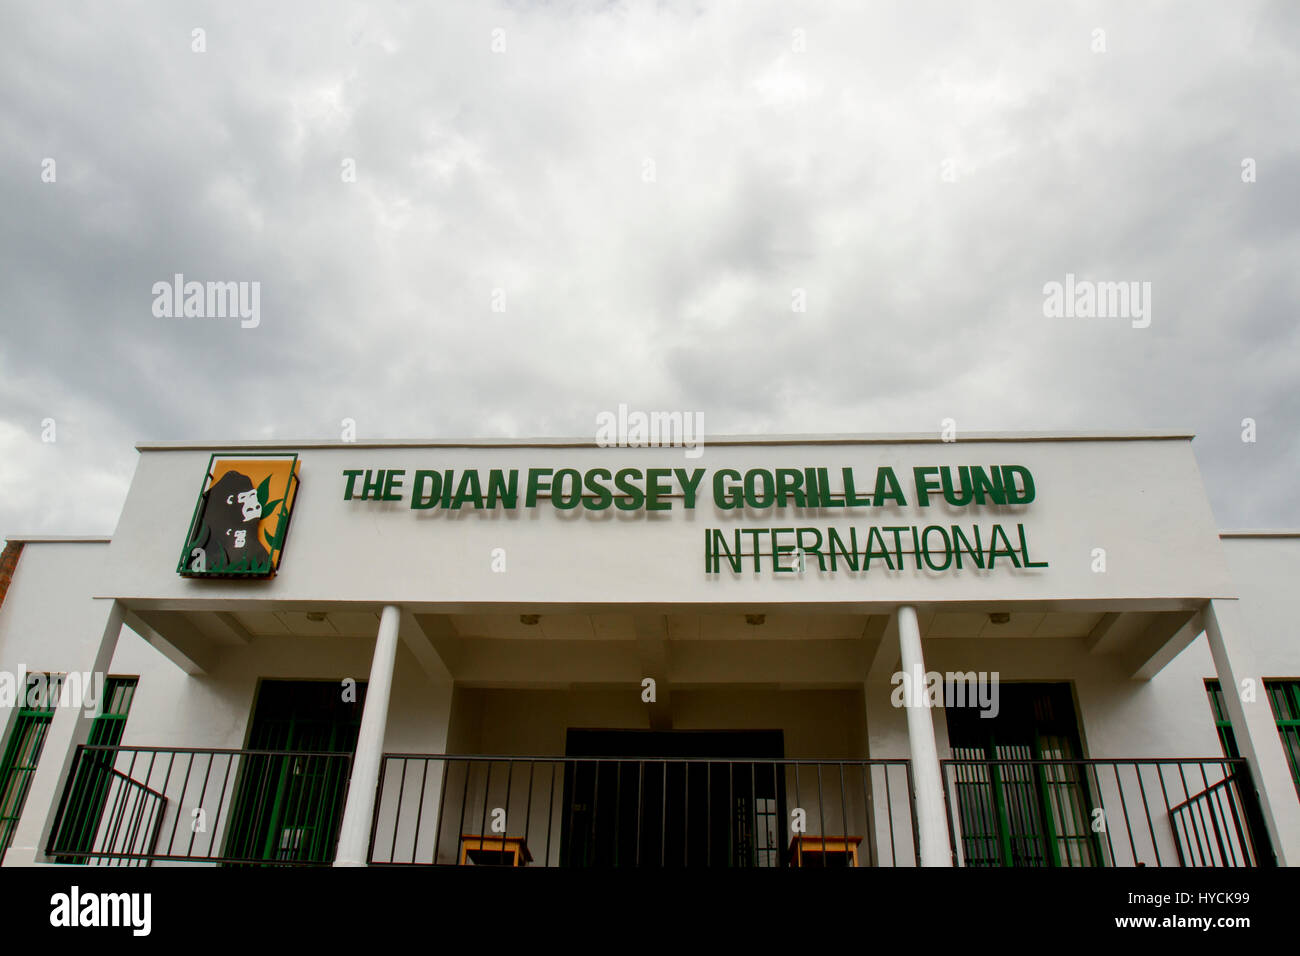 Virunga, Ruanda - 28. Februar 2017: Zeichen vor das Dian Fossey Gorilla Fund International Research Center in Virunga, Ruanda. Stockfoto